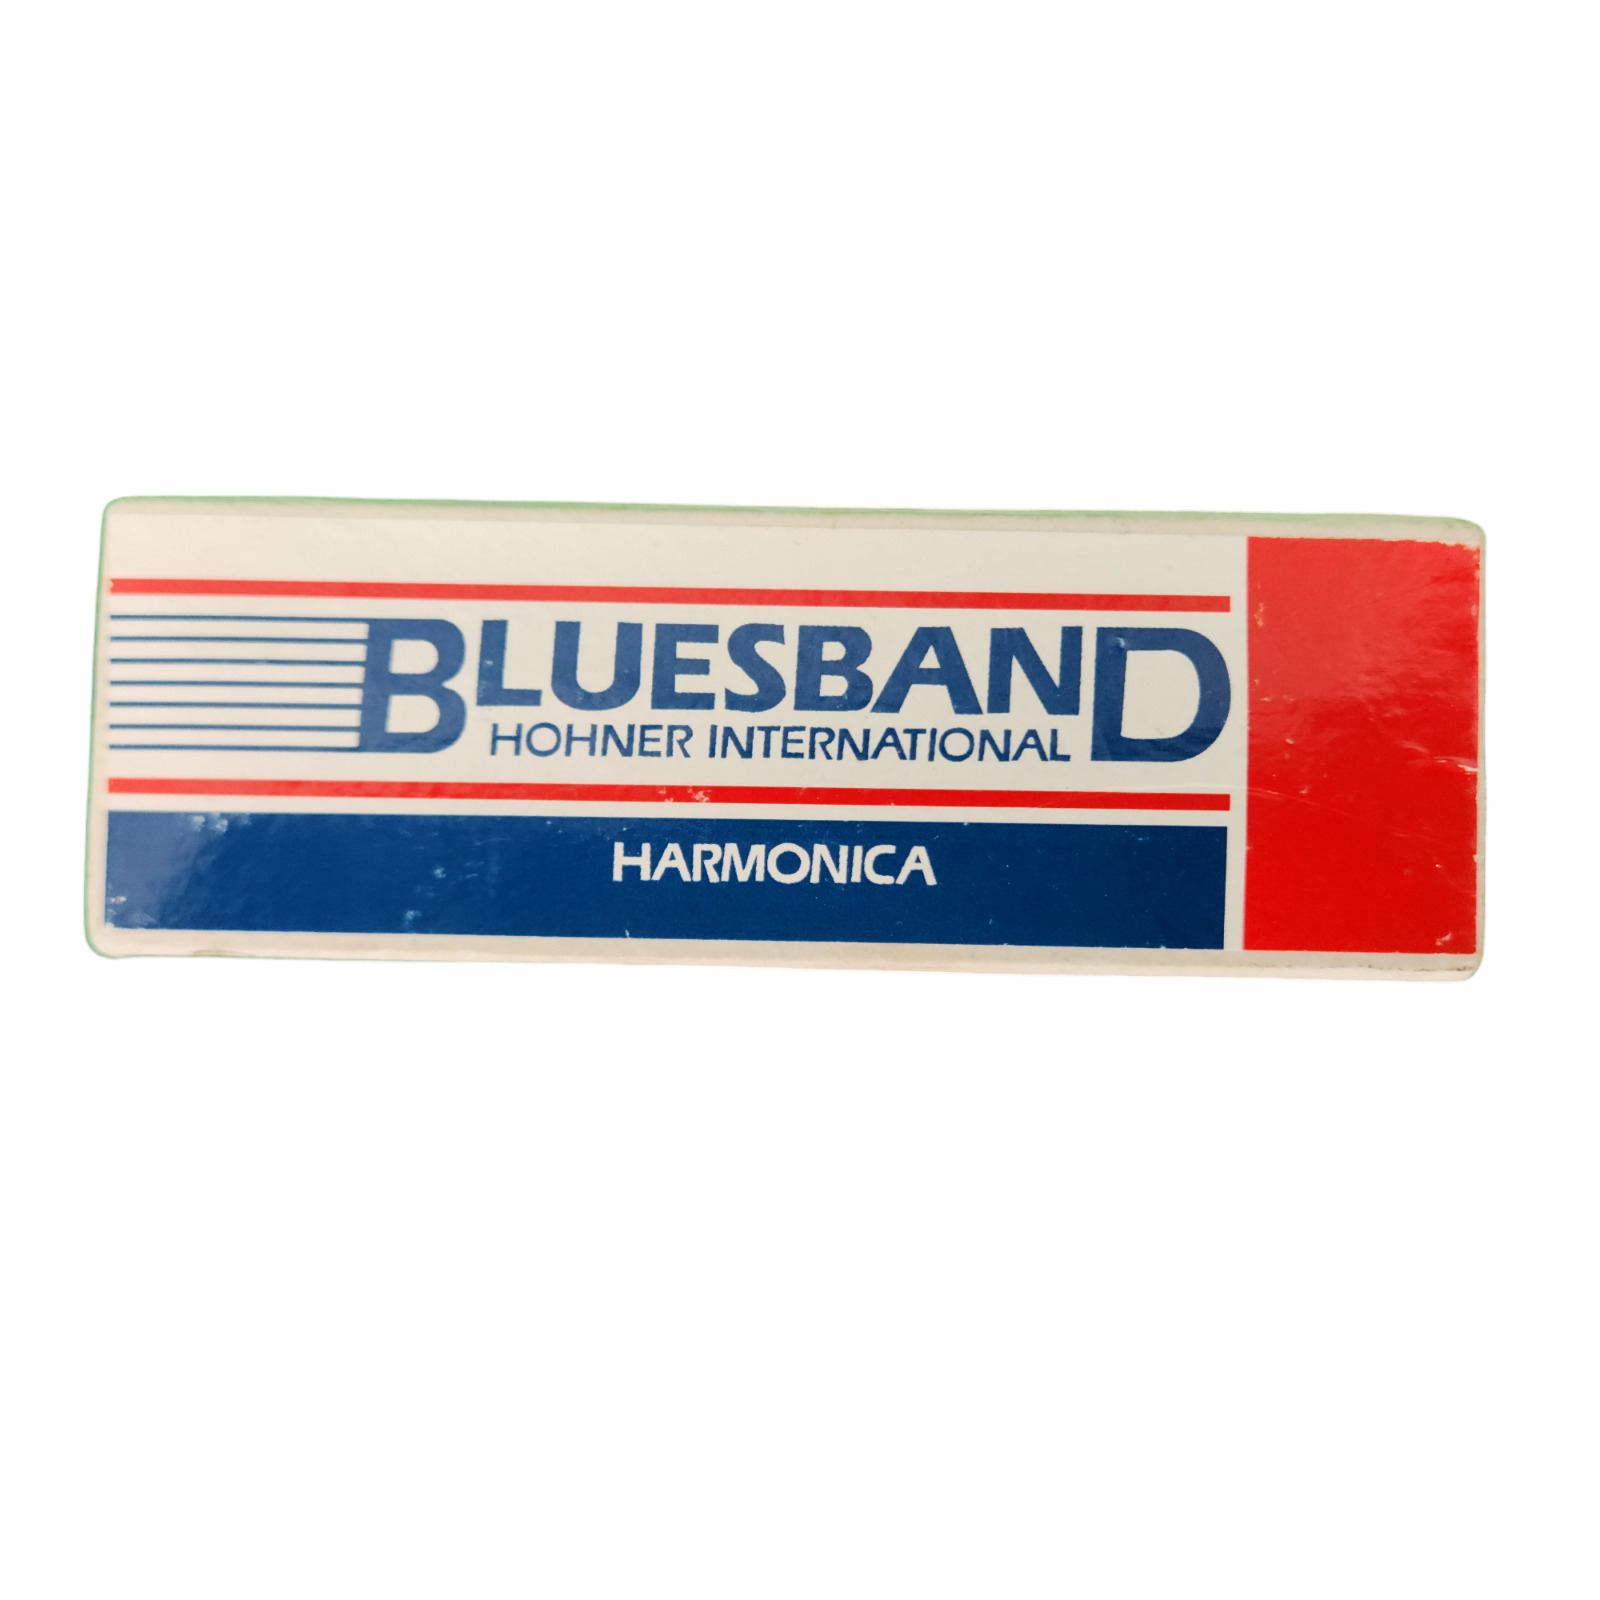 Hohner 1501 Blues Band Harmonica Key of C Bluesband - NEW + BOX SET & MANUAL